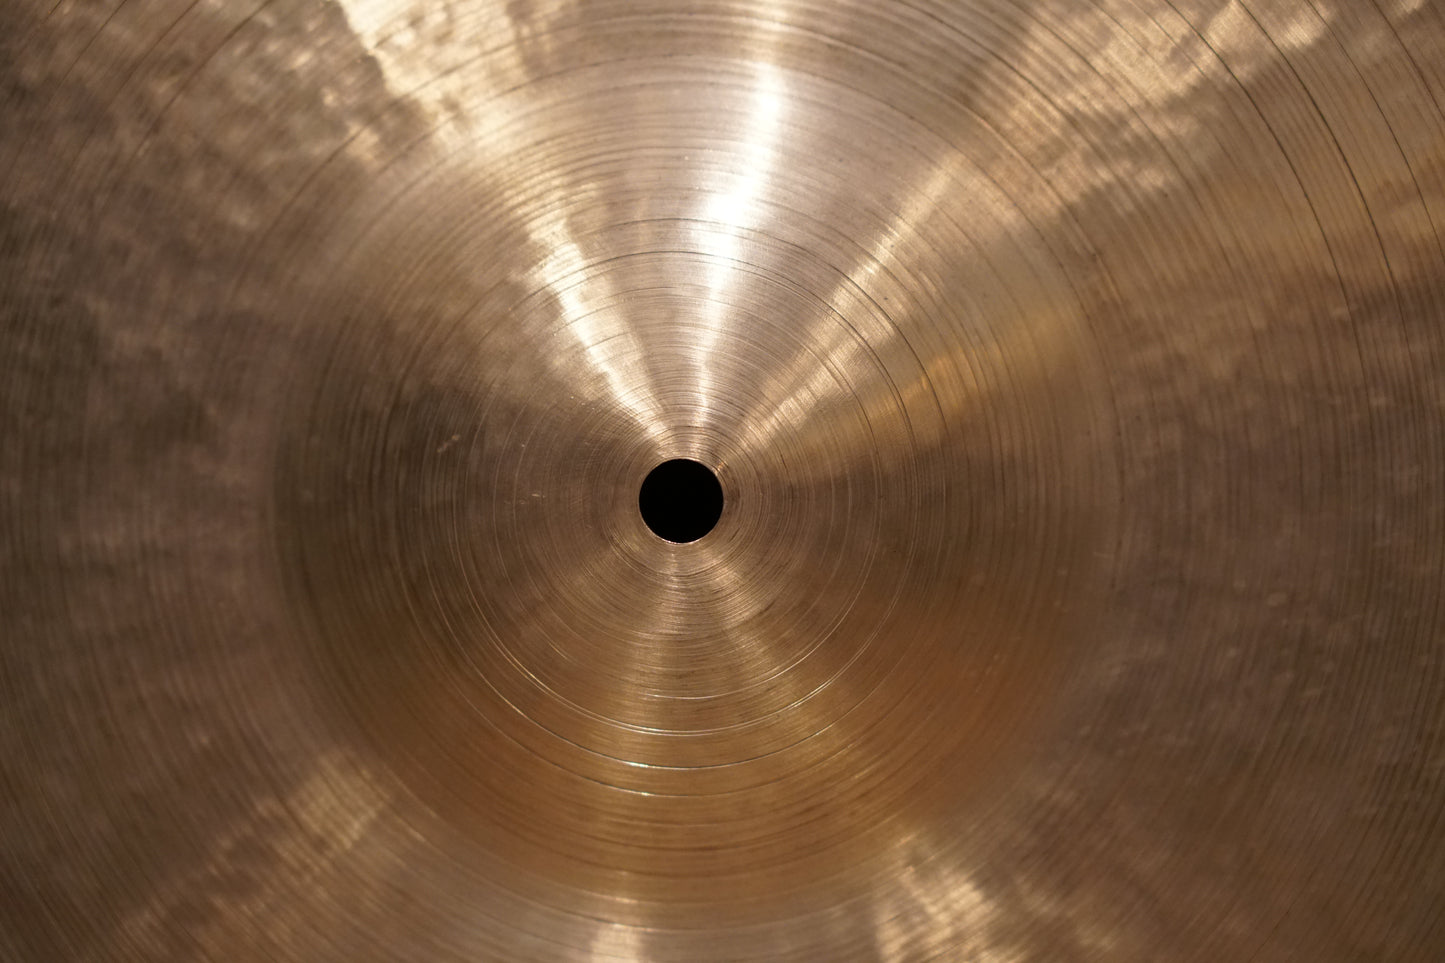 Spizzichino 20" Ride Cymbal - 1829g